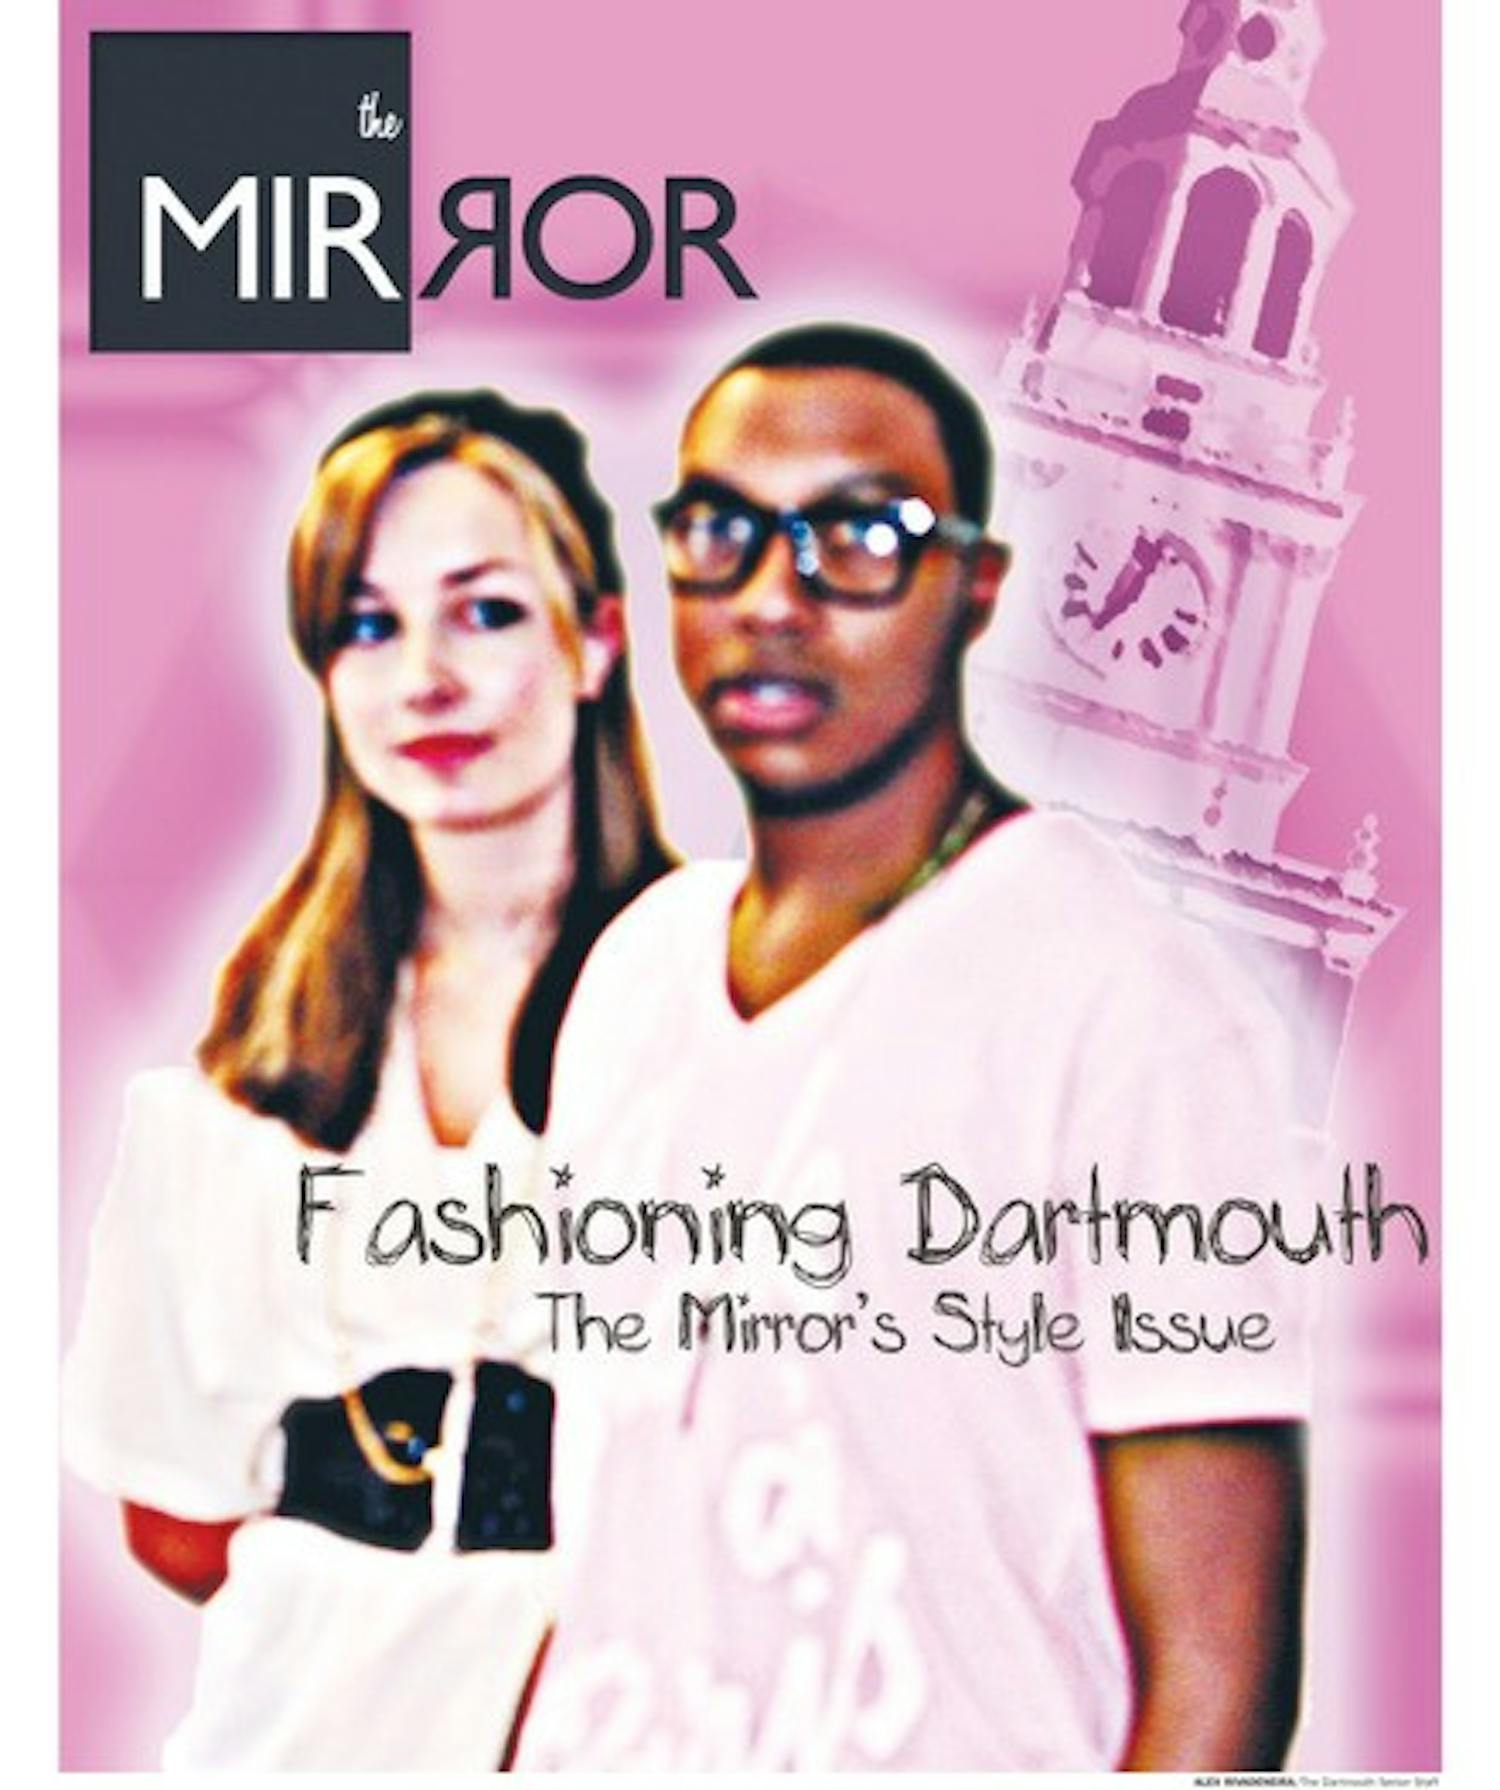 The Mirror: Fashioning Dartmouth